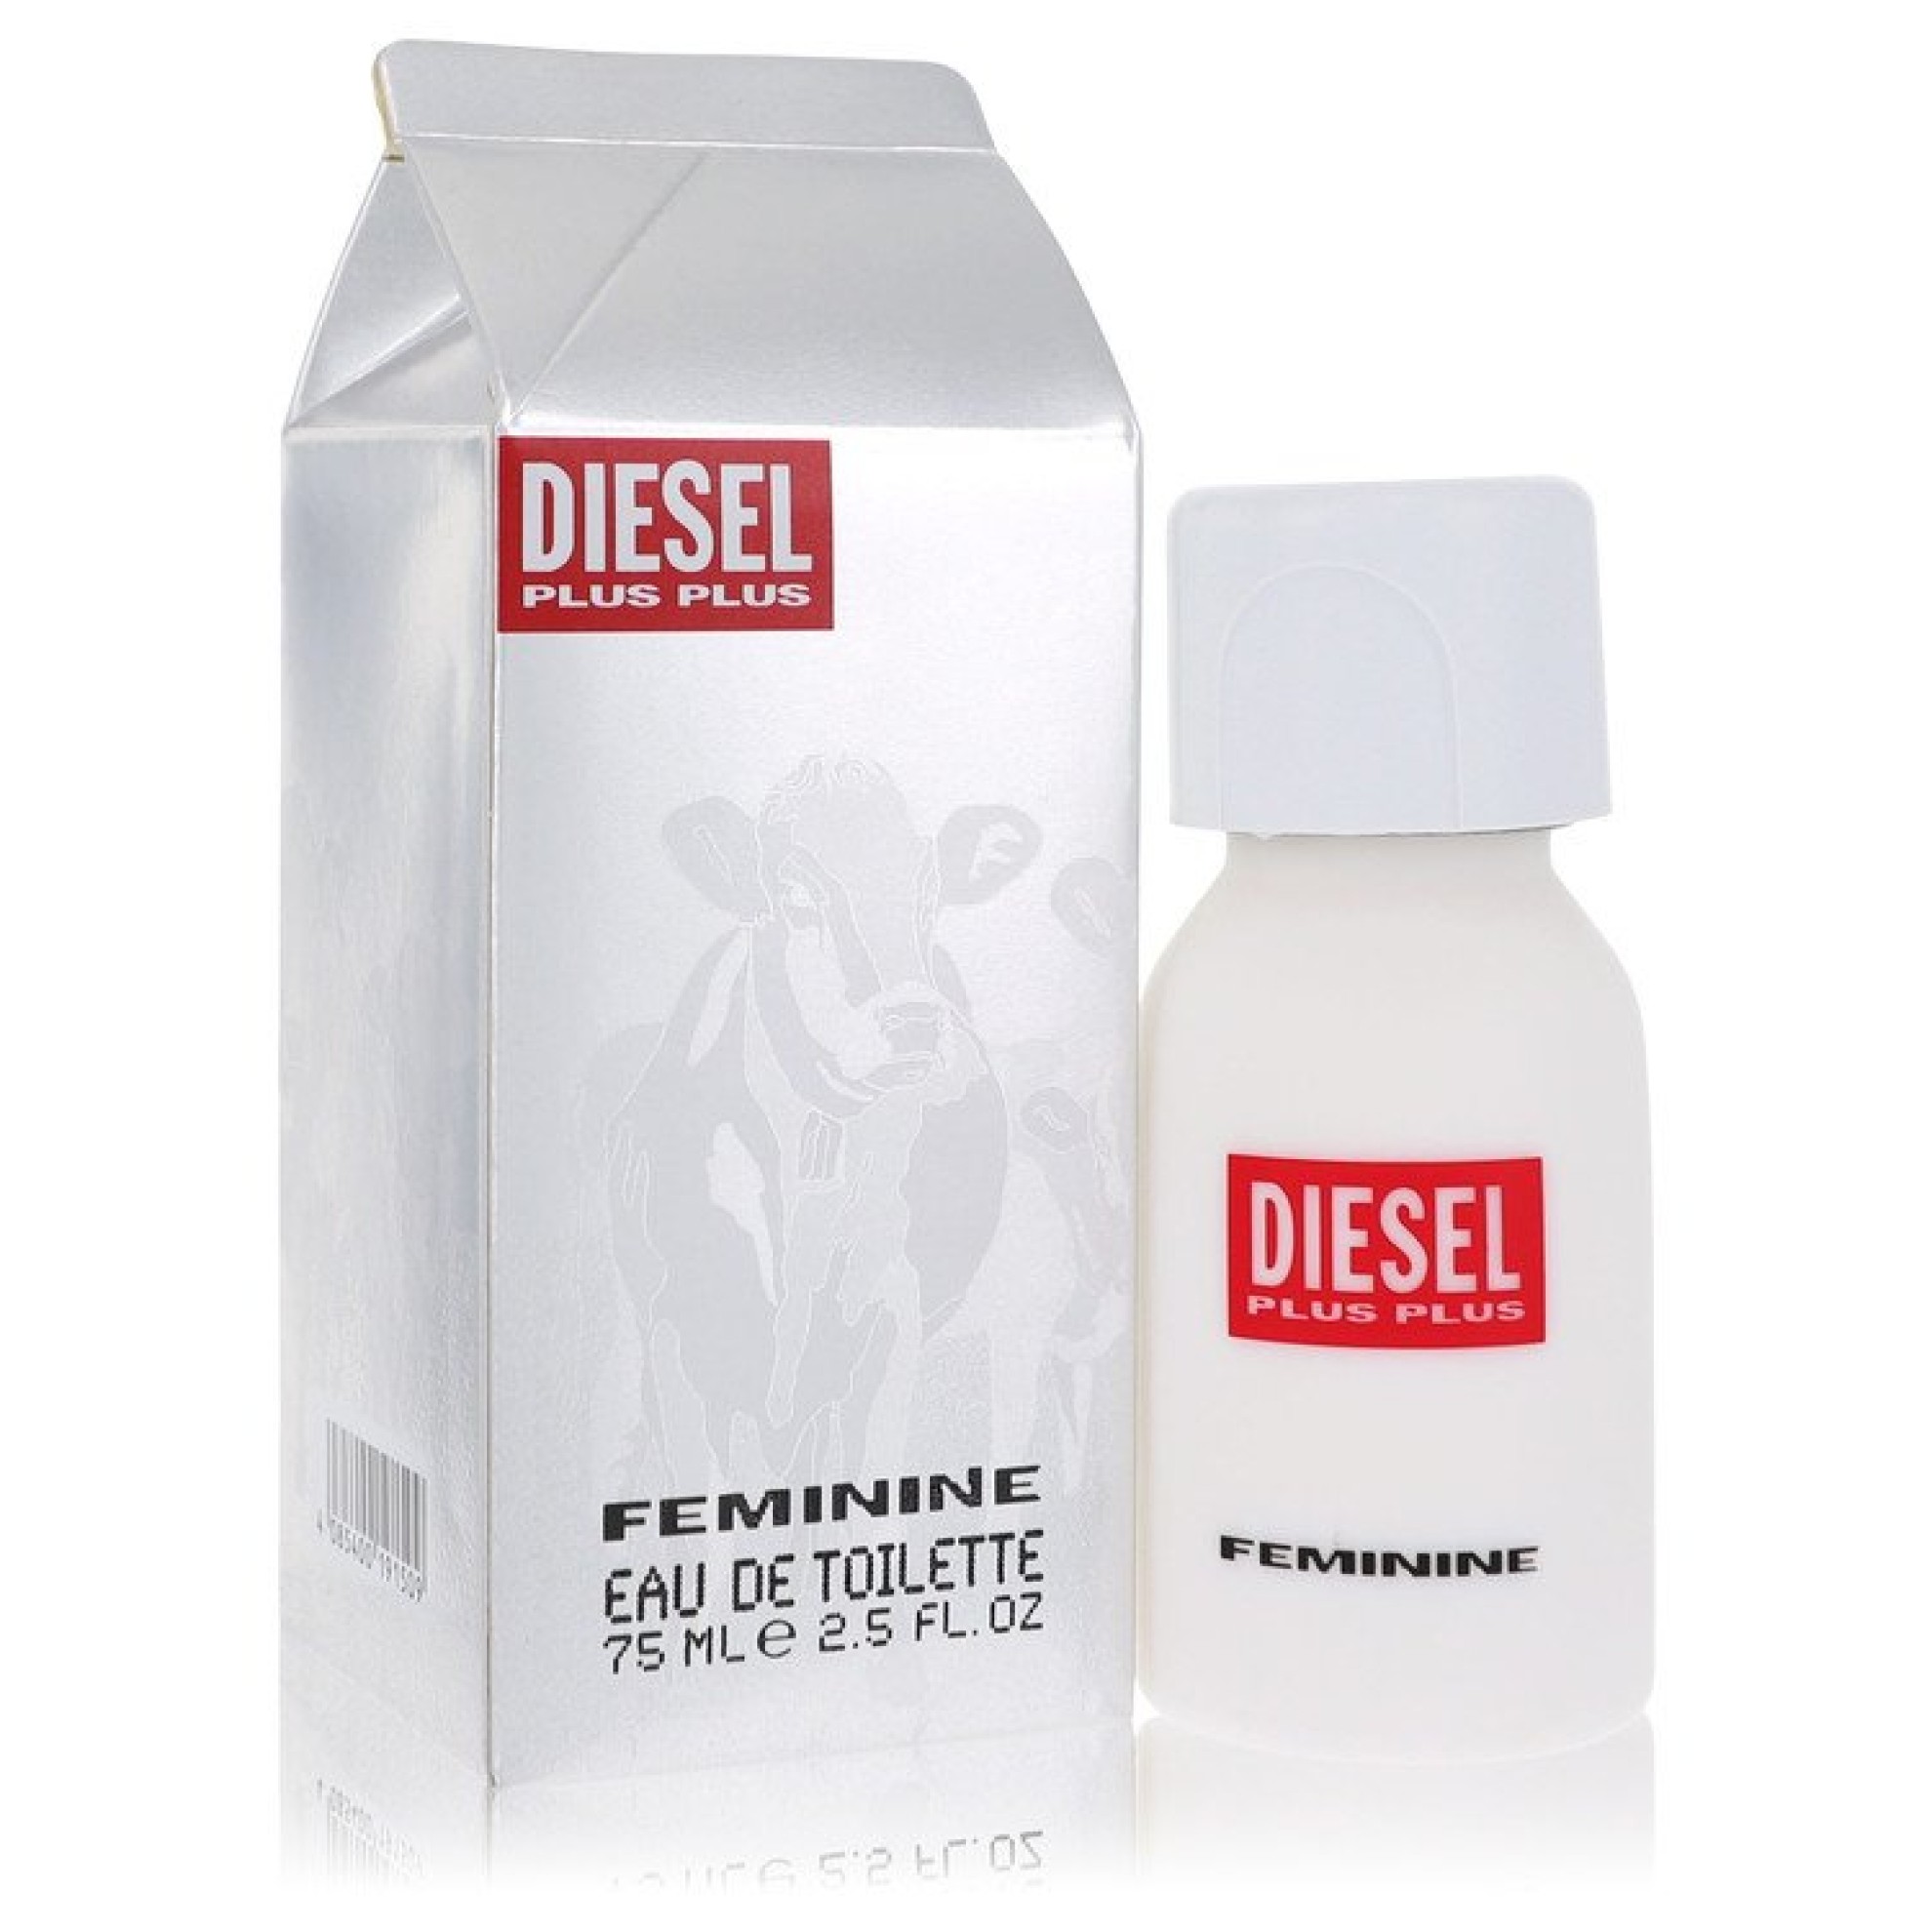 Diesel DIESEL PLUS PLUS Eau De Toilette Spray 75 ml